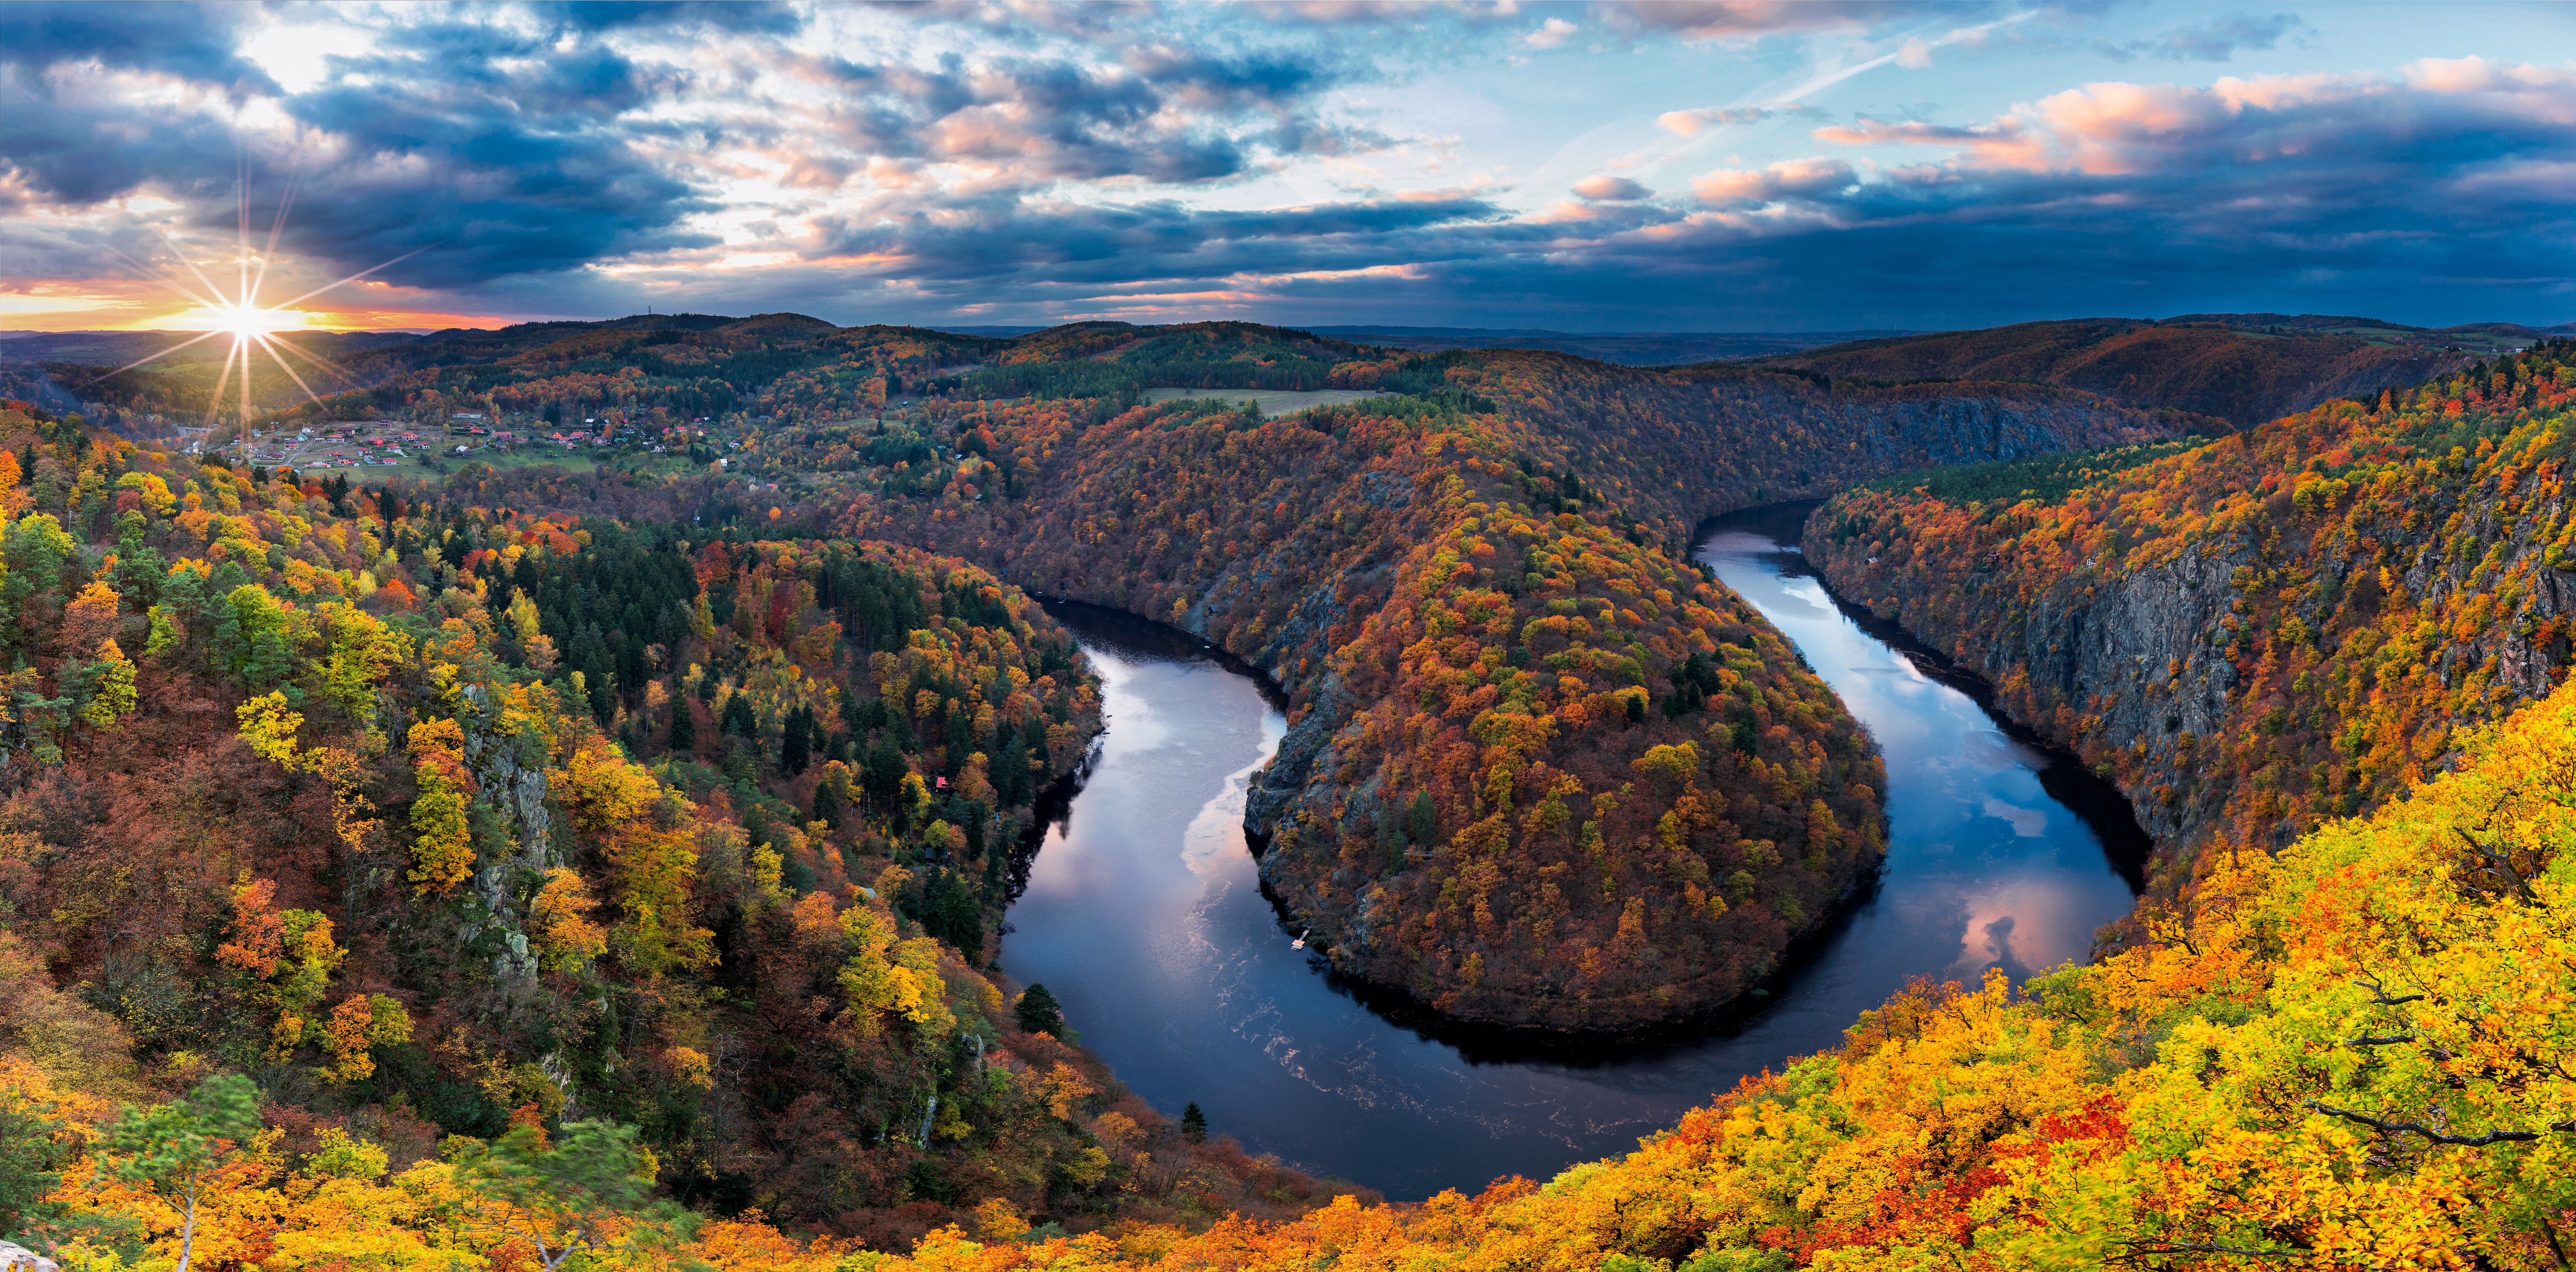 The true colors of nature - Autumn in the Czech Republic — Steemit